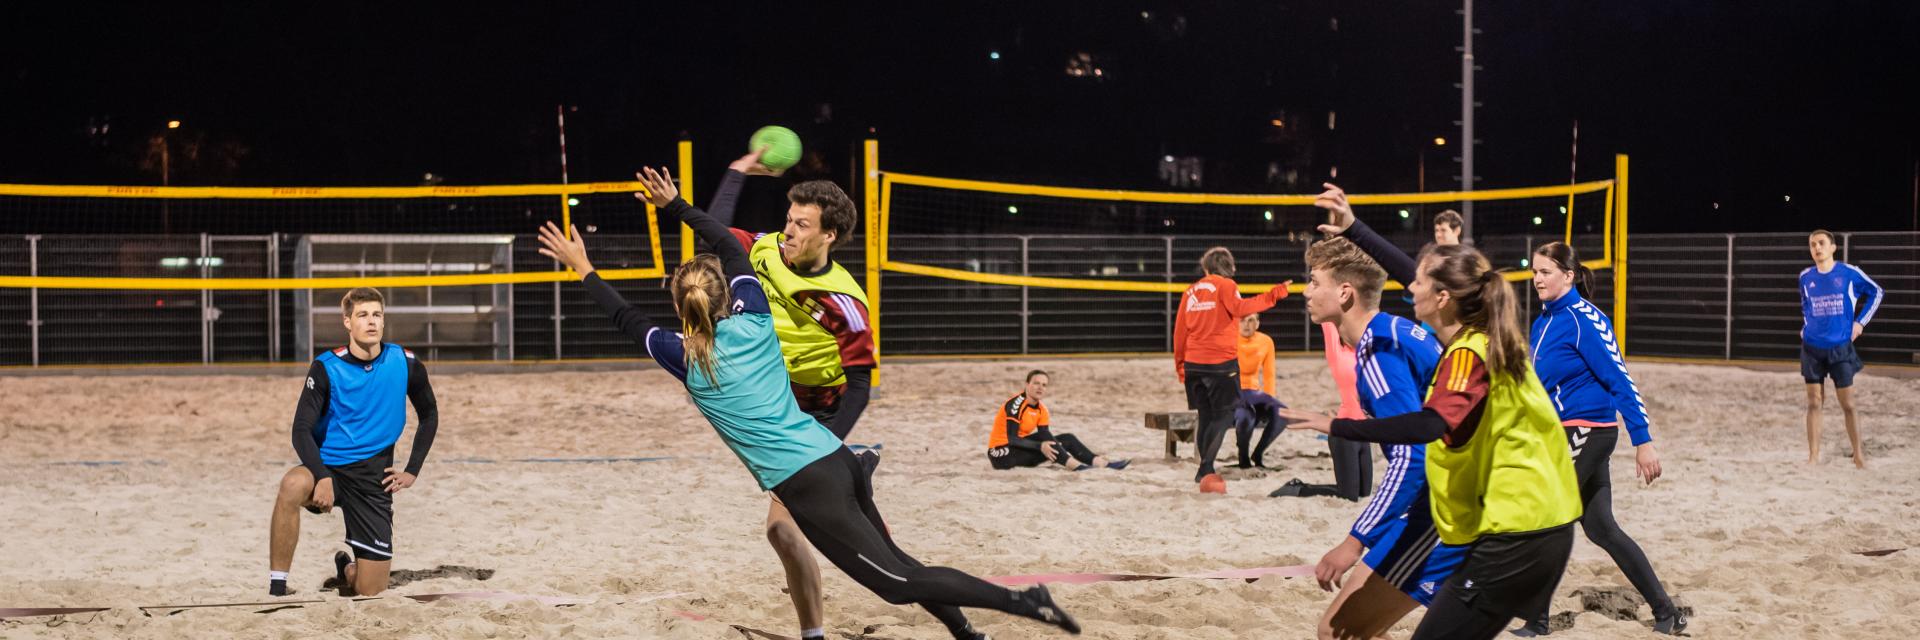 Play Beach Handball at the Sports Center